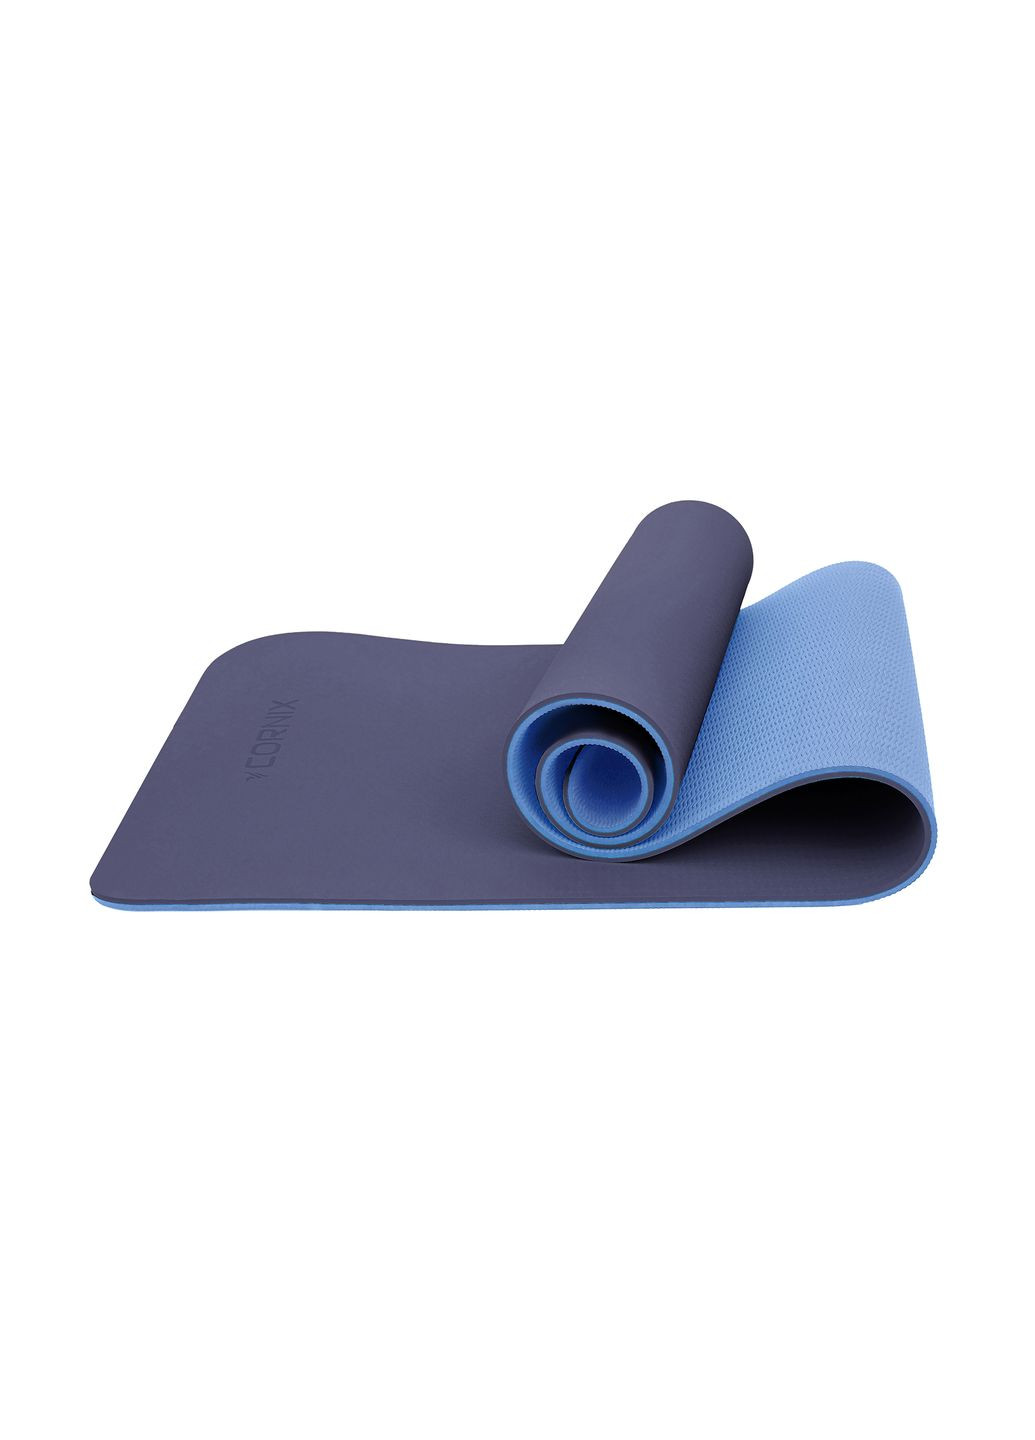 Коврик спортивный TPE 183 x 61 x 1 cм для йоги и фитнеса XR0092 Blue/Sky Blue Cornix xr-0092 (275654242)